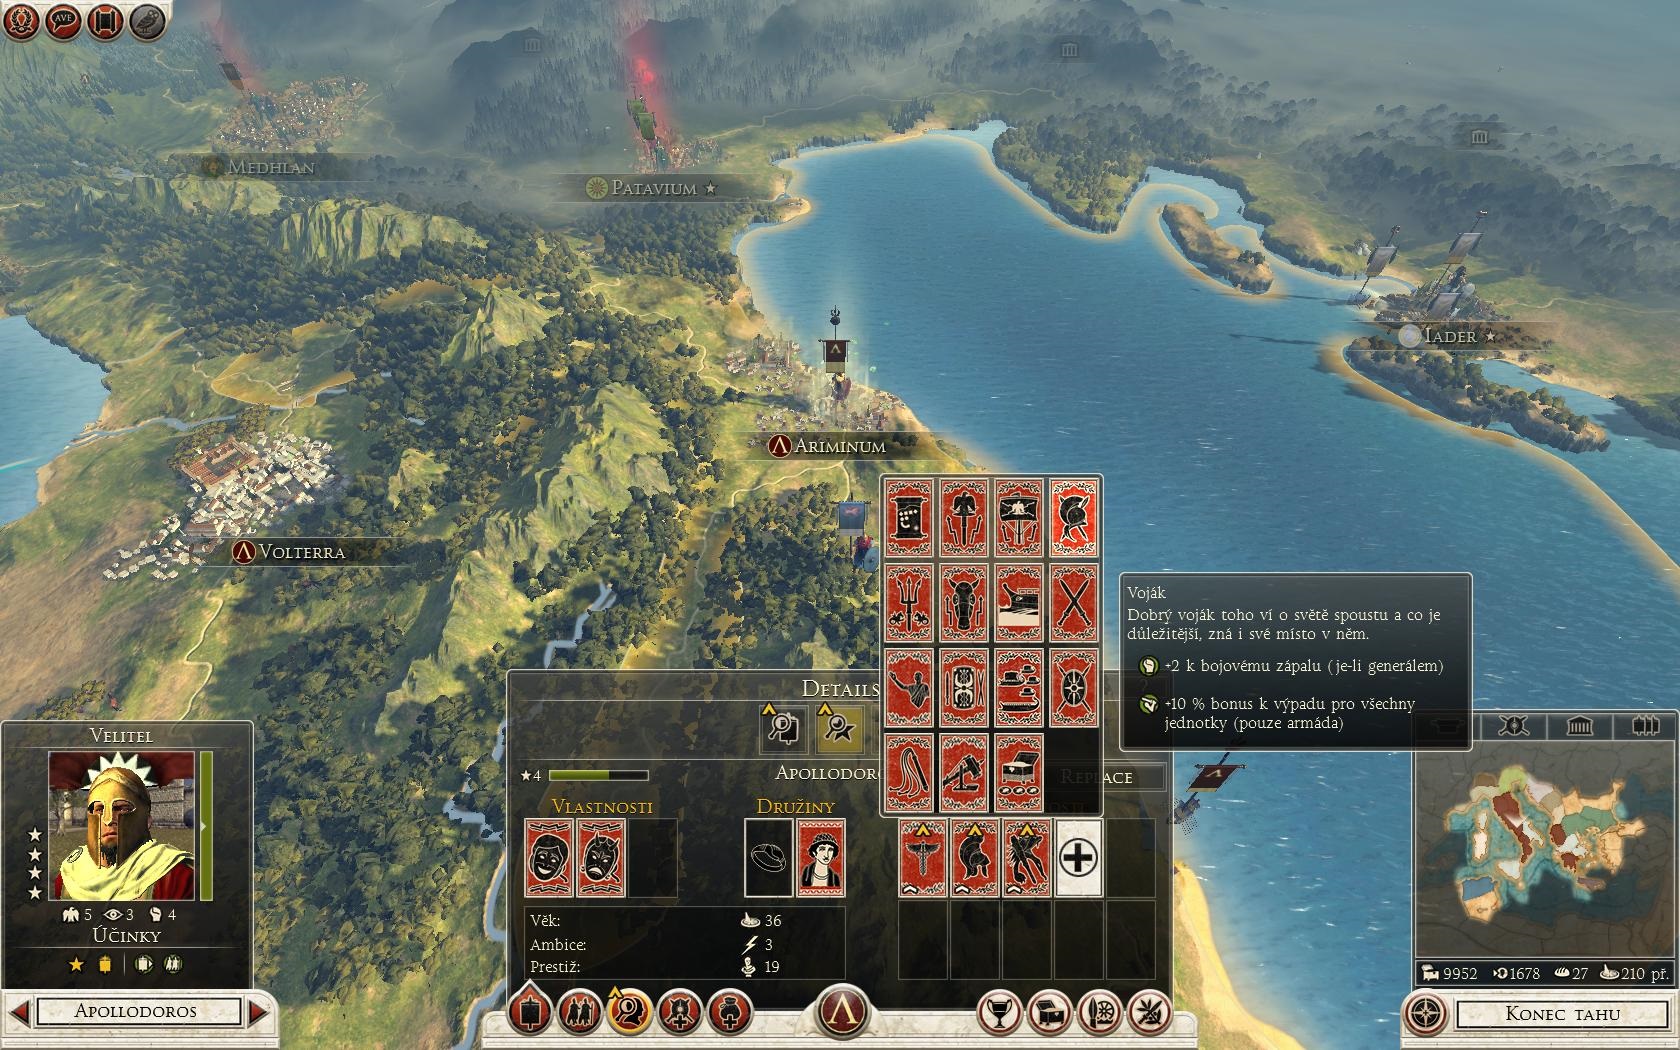 Total War: Rome II